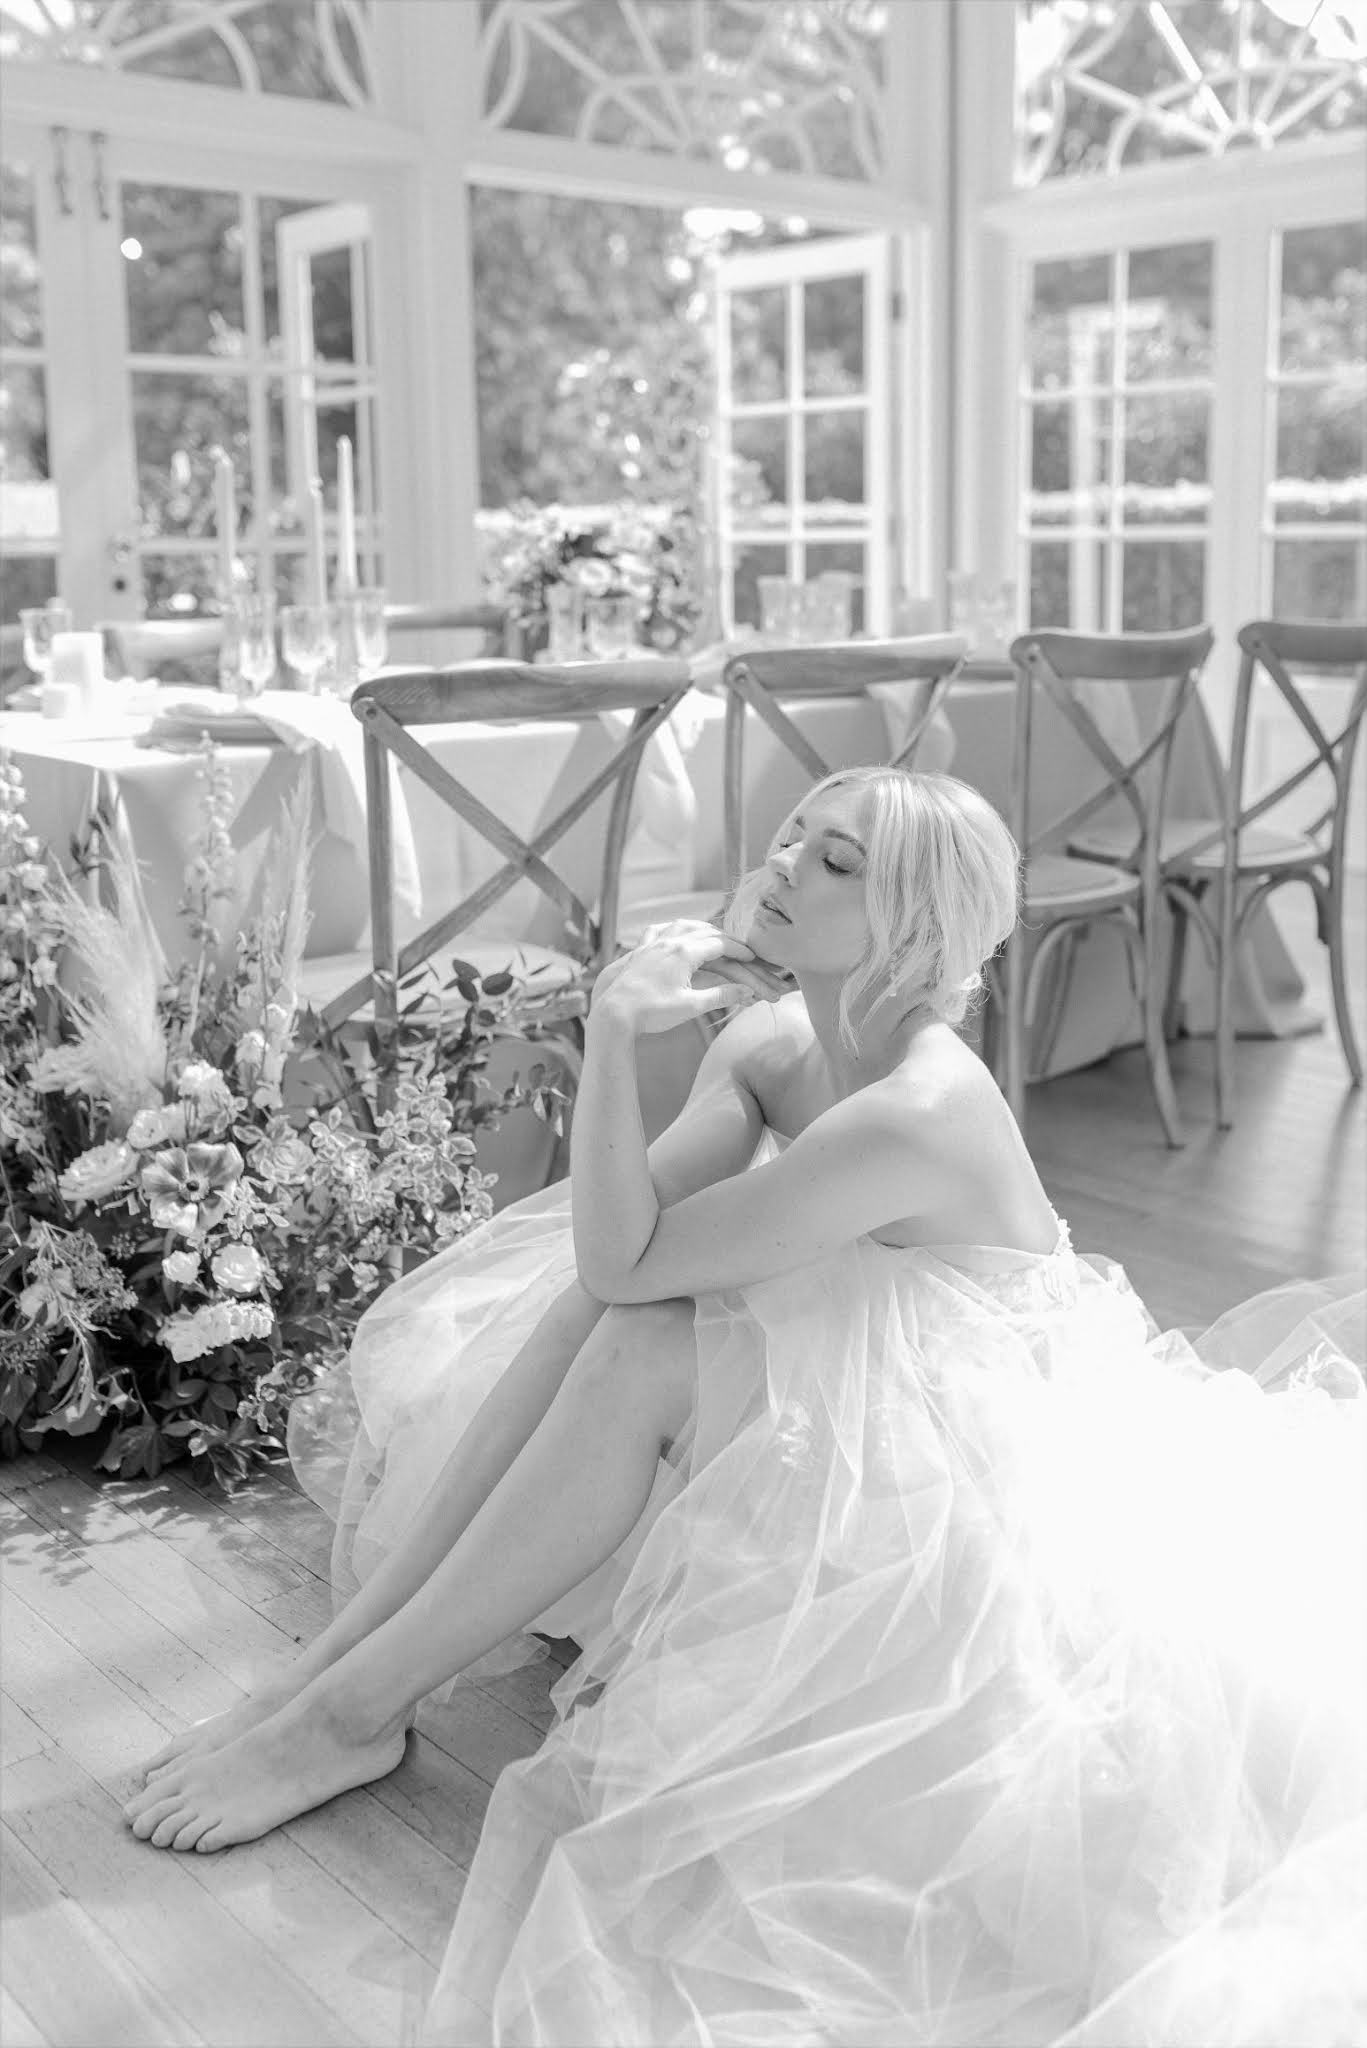 lauren olivia photography toowoomba weddings gabbinbar homestead bridal gowns accessories venue floral design stationery